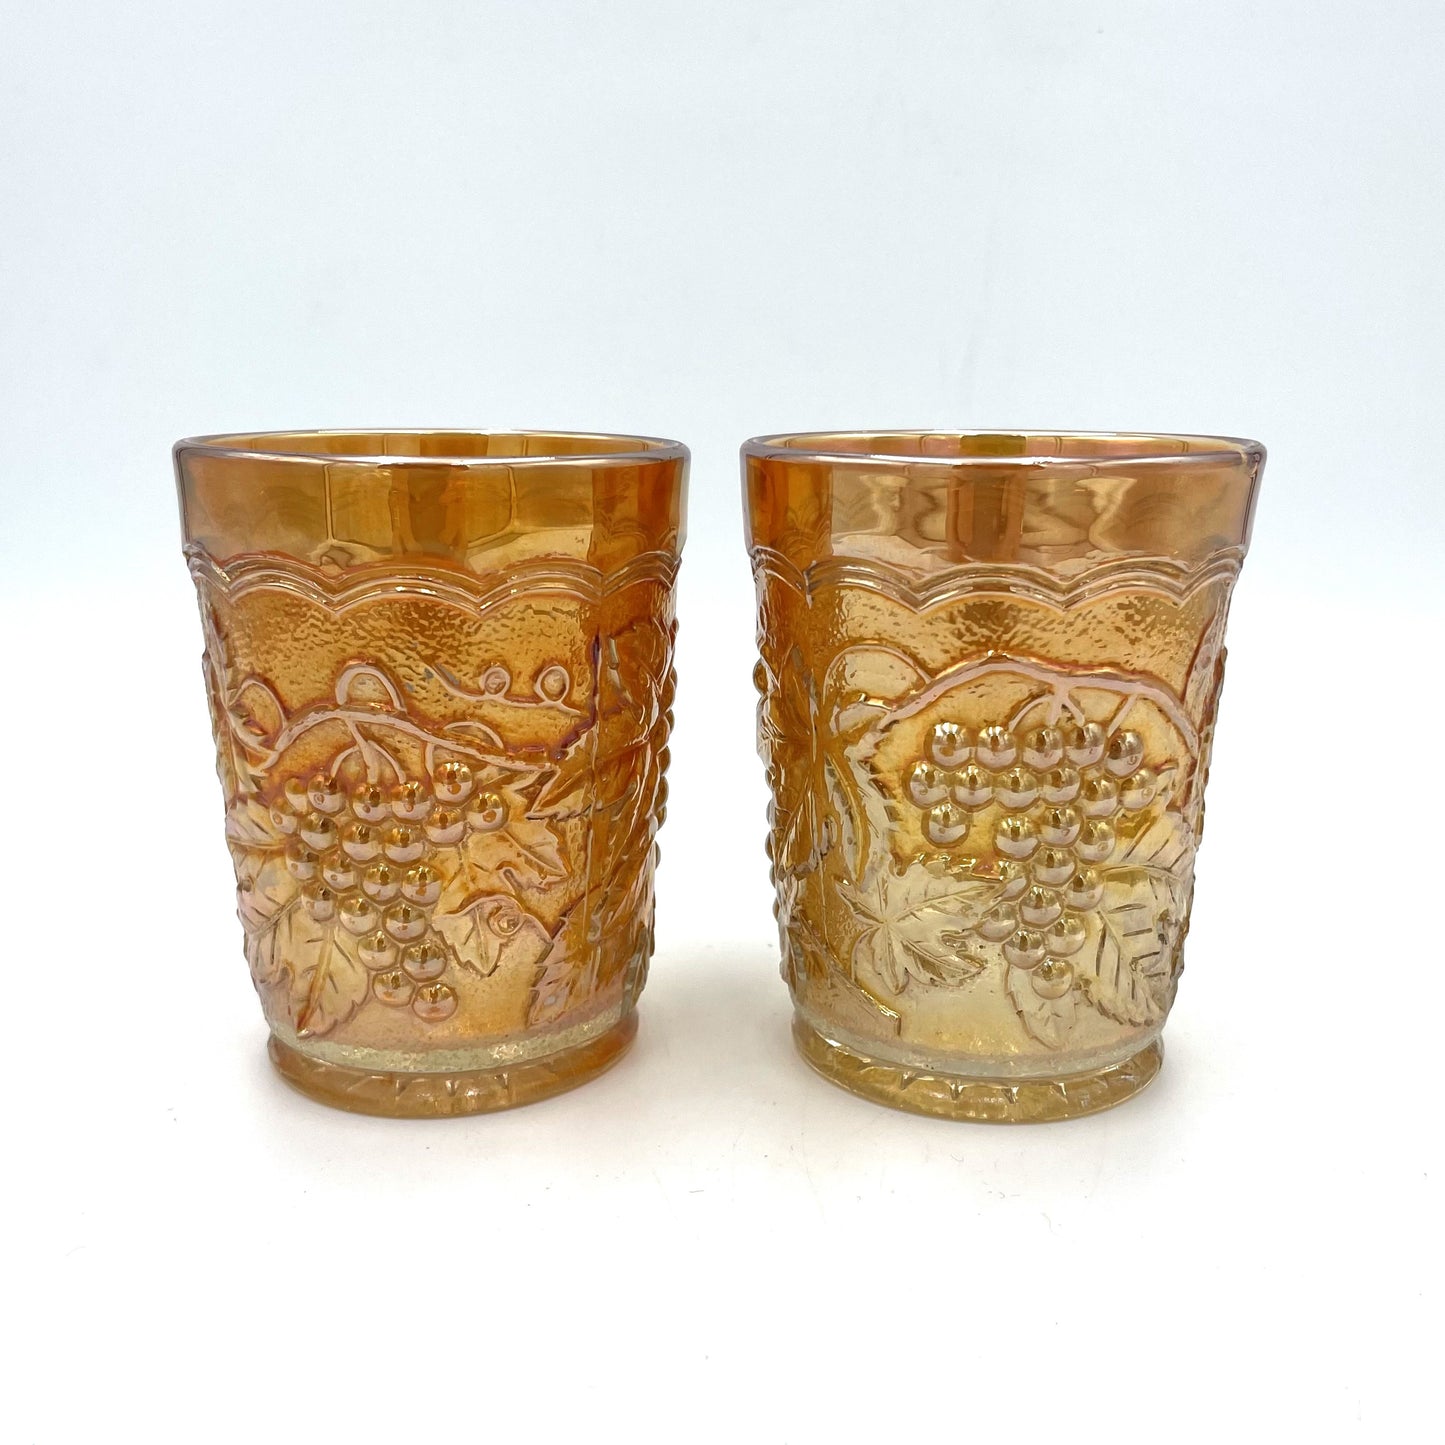 Pair of Carnival Glass Water Glasses - 10cm